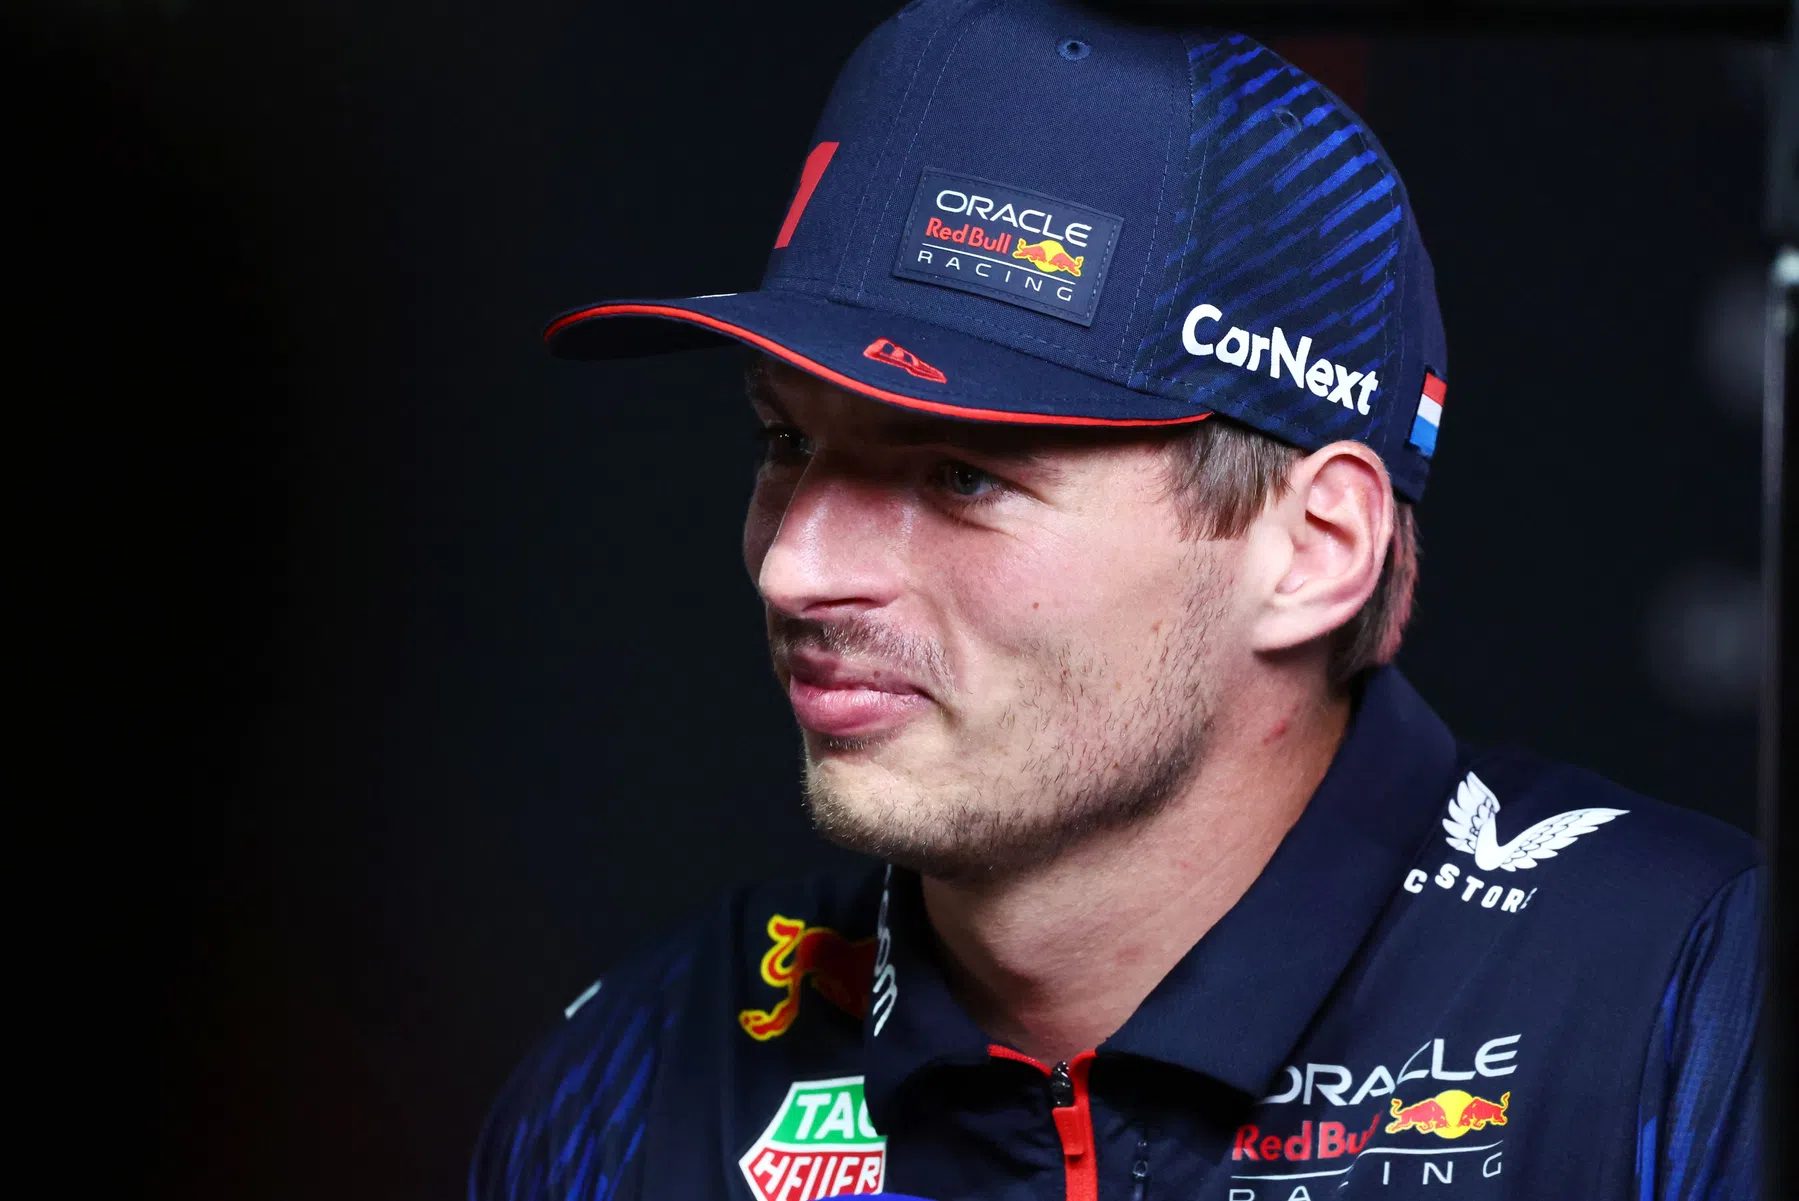 Windsor analiza las sesiones. Verstappen impresiona en el Red Bull